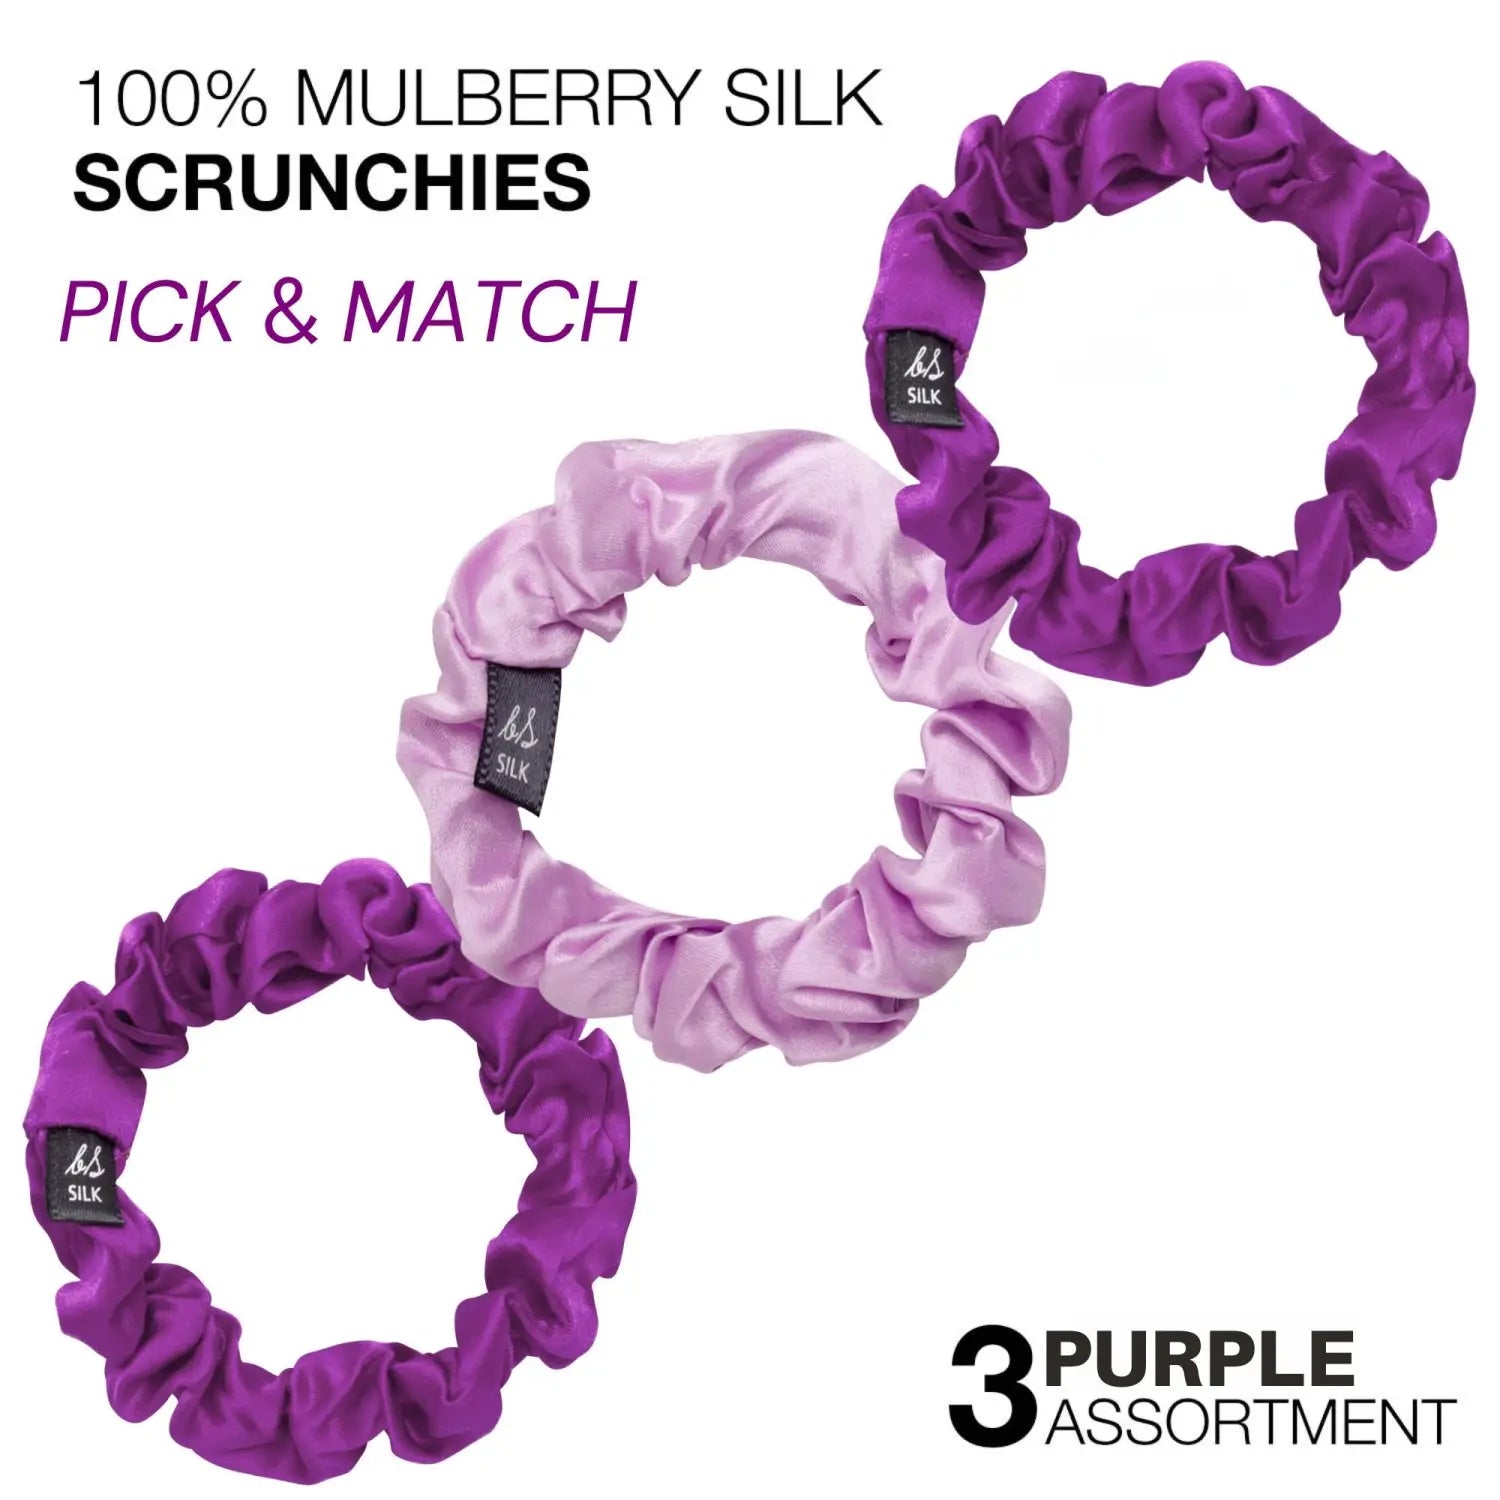 Three purple mulberry silk hair scrunchies with black tag, Small Skinny Mulberry Silk Hair Scrunchies - 3 Pack.